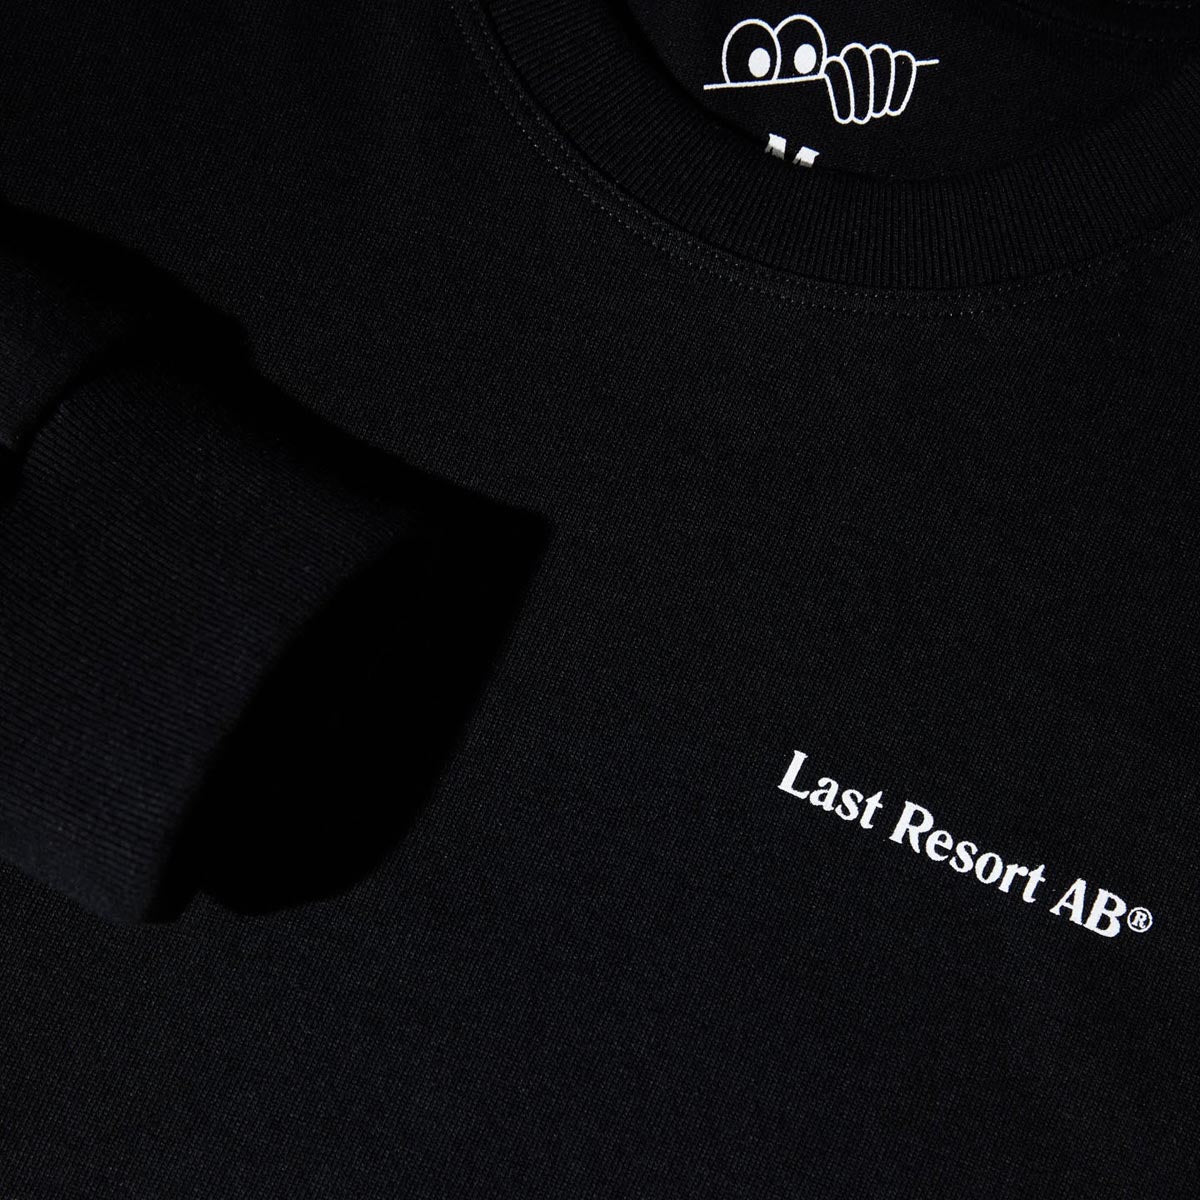 Last Resort AB Atlas Monogram Long Sleeve T-Shirt - Black/White image 3